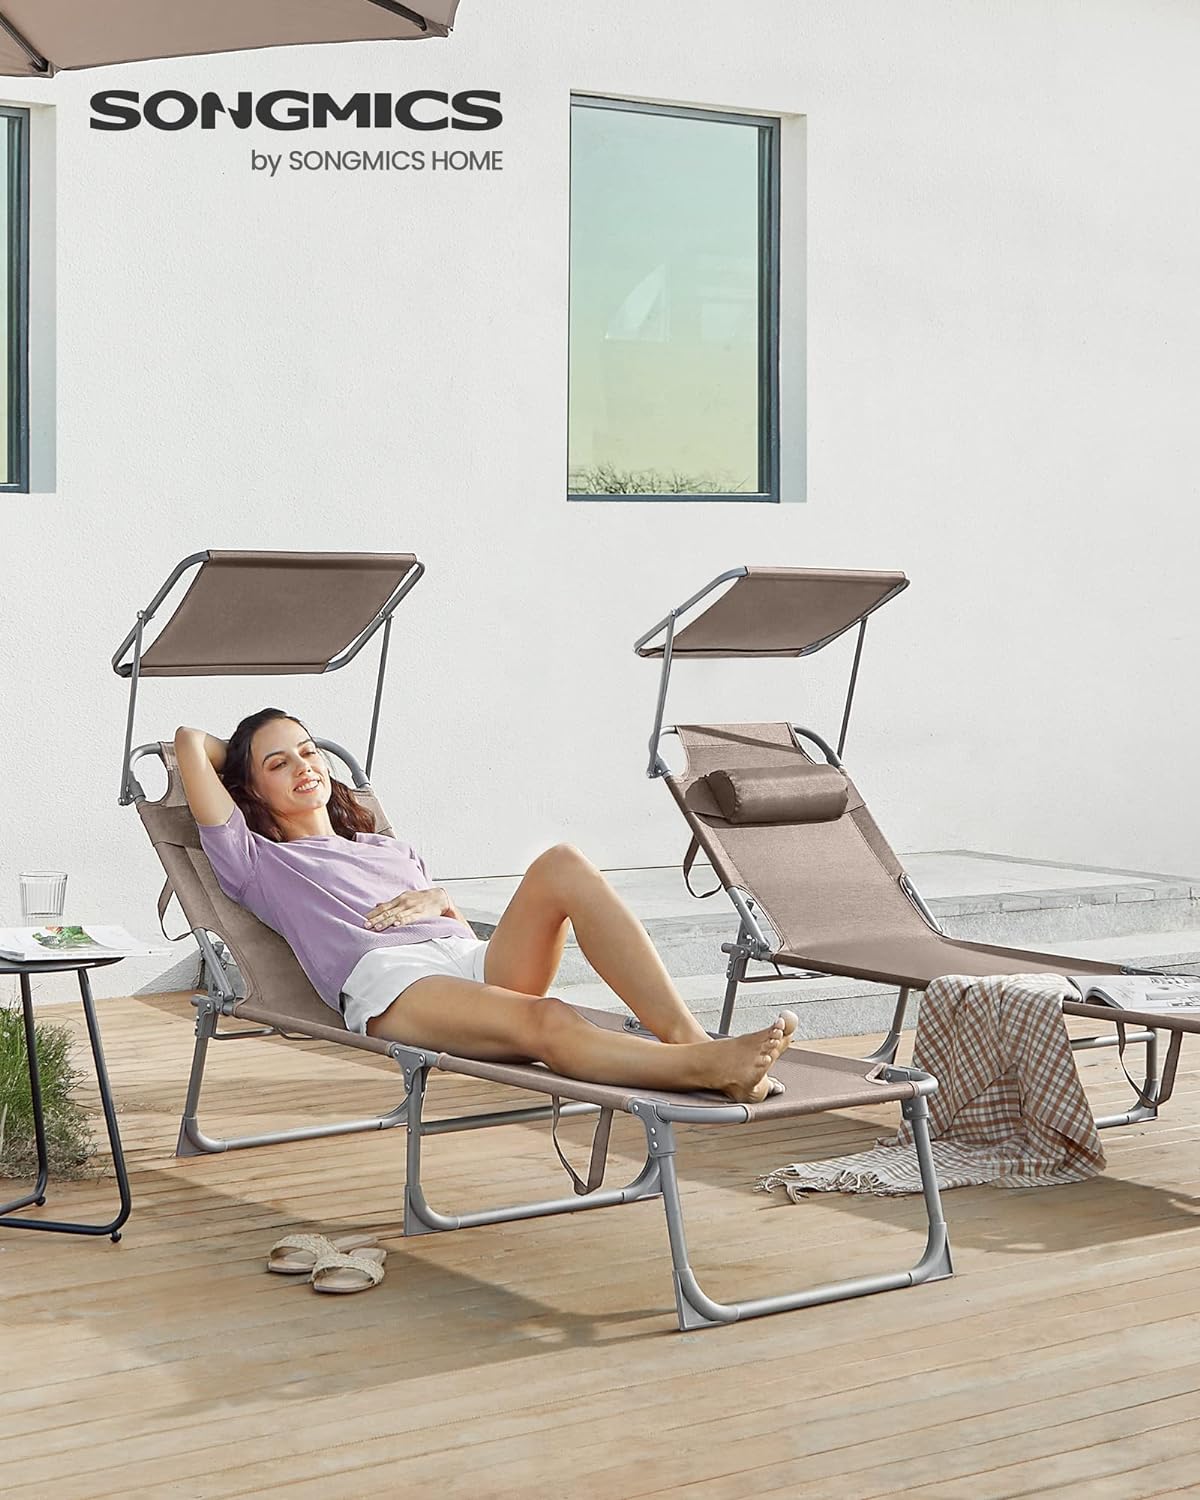 Sun Lounger, Deck Chair Folding, Sunbed, 193 x 53 x 29 cm, Max. Load 150 kg, with Sunshade Headrest